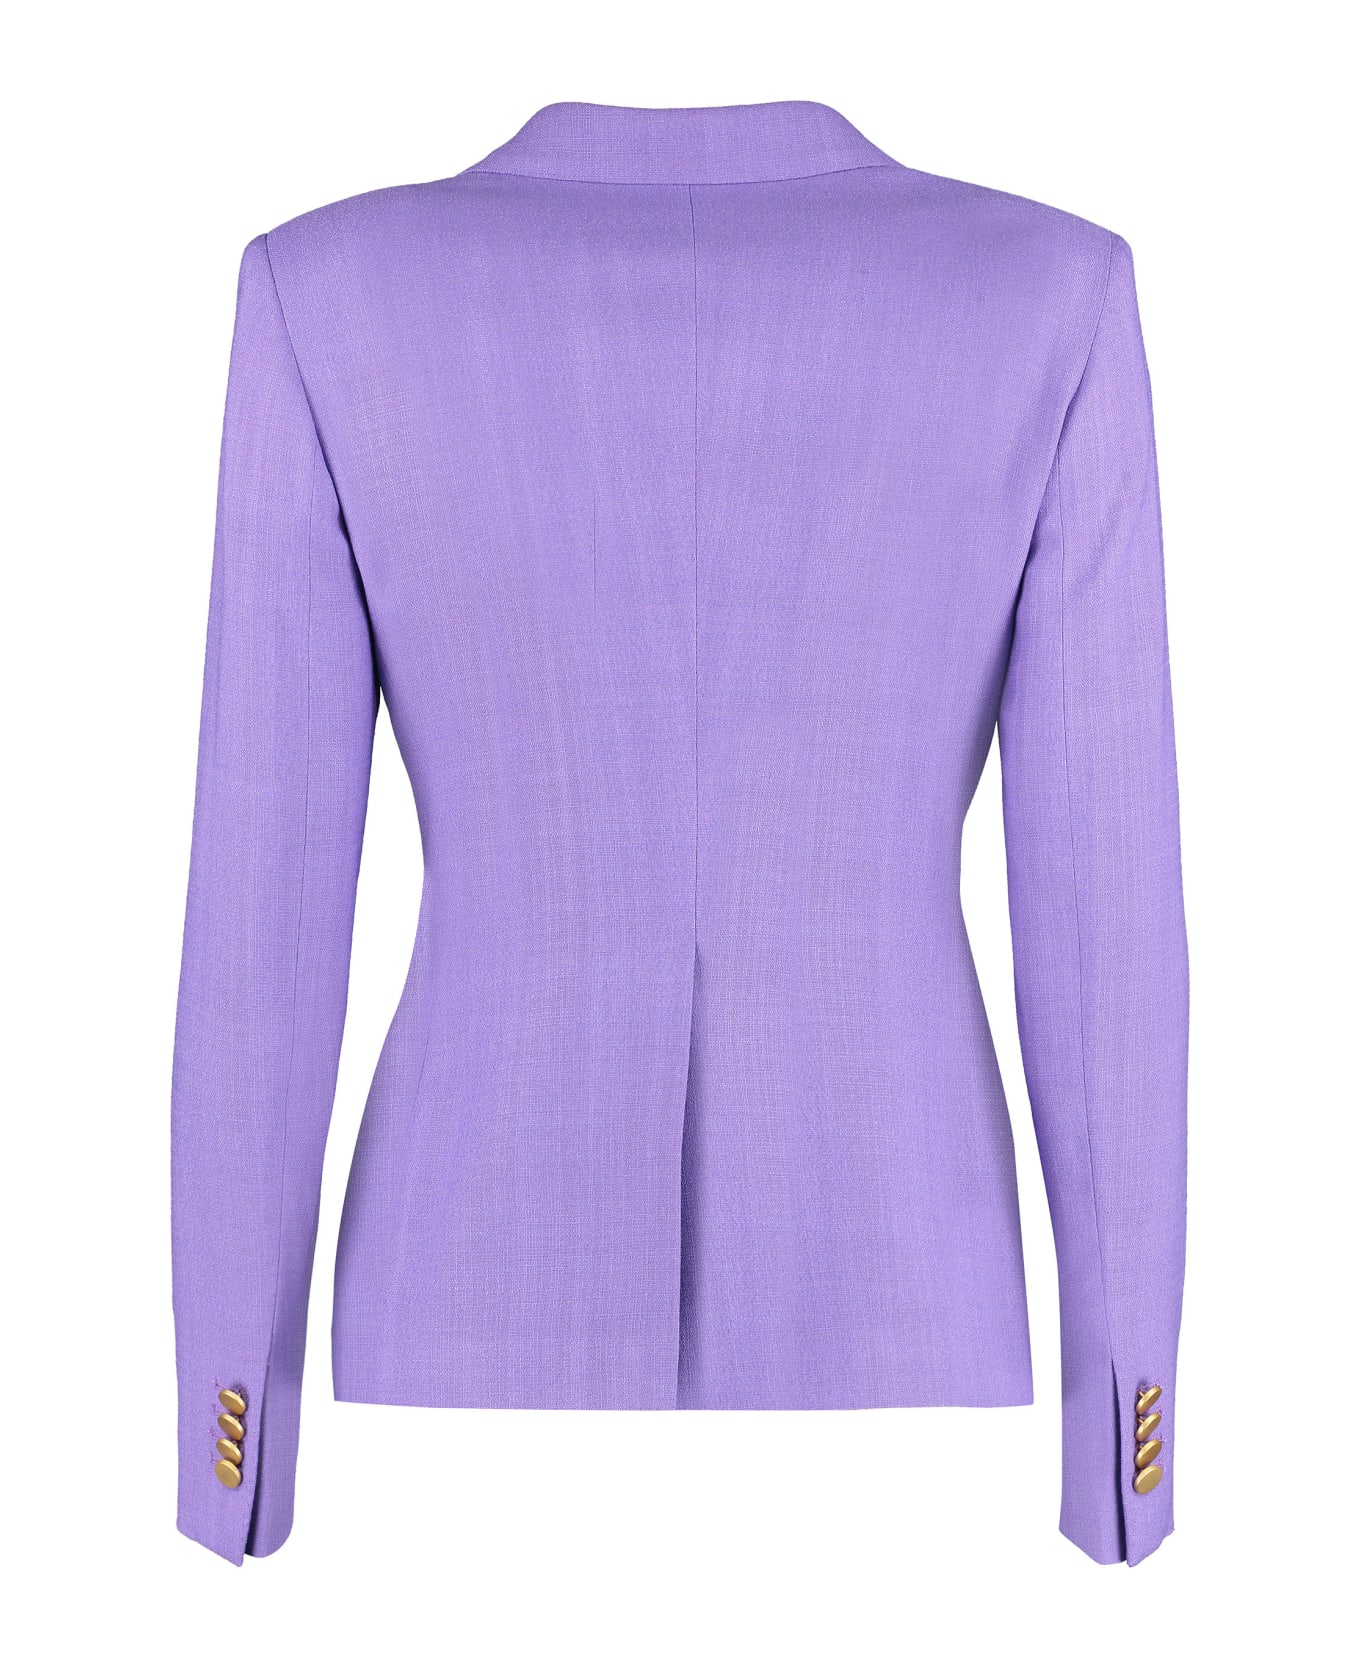 Tagliatore 0205 J-alicya Double-breasted Jacket - purple